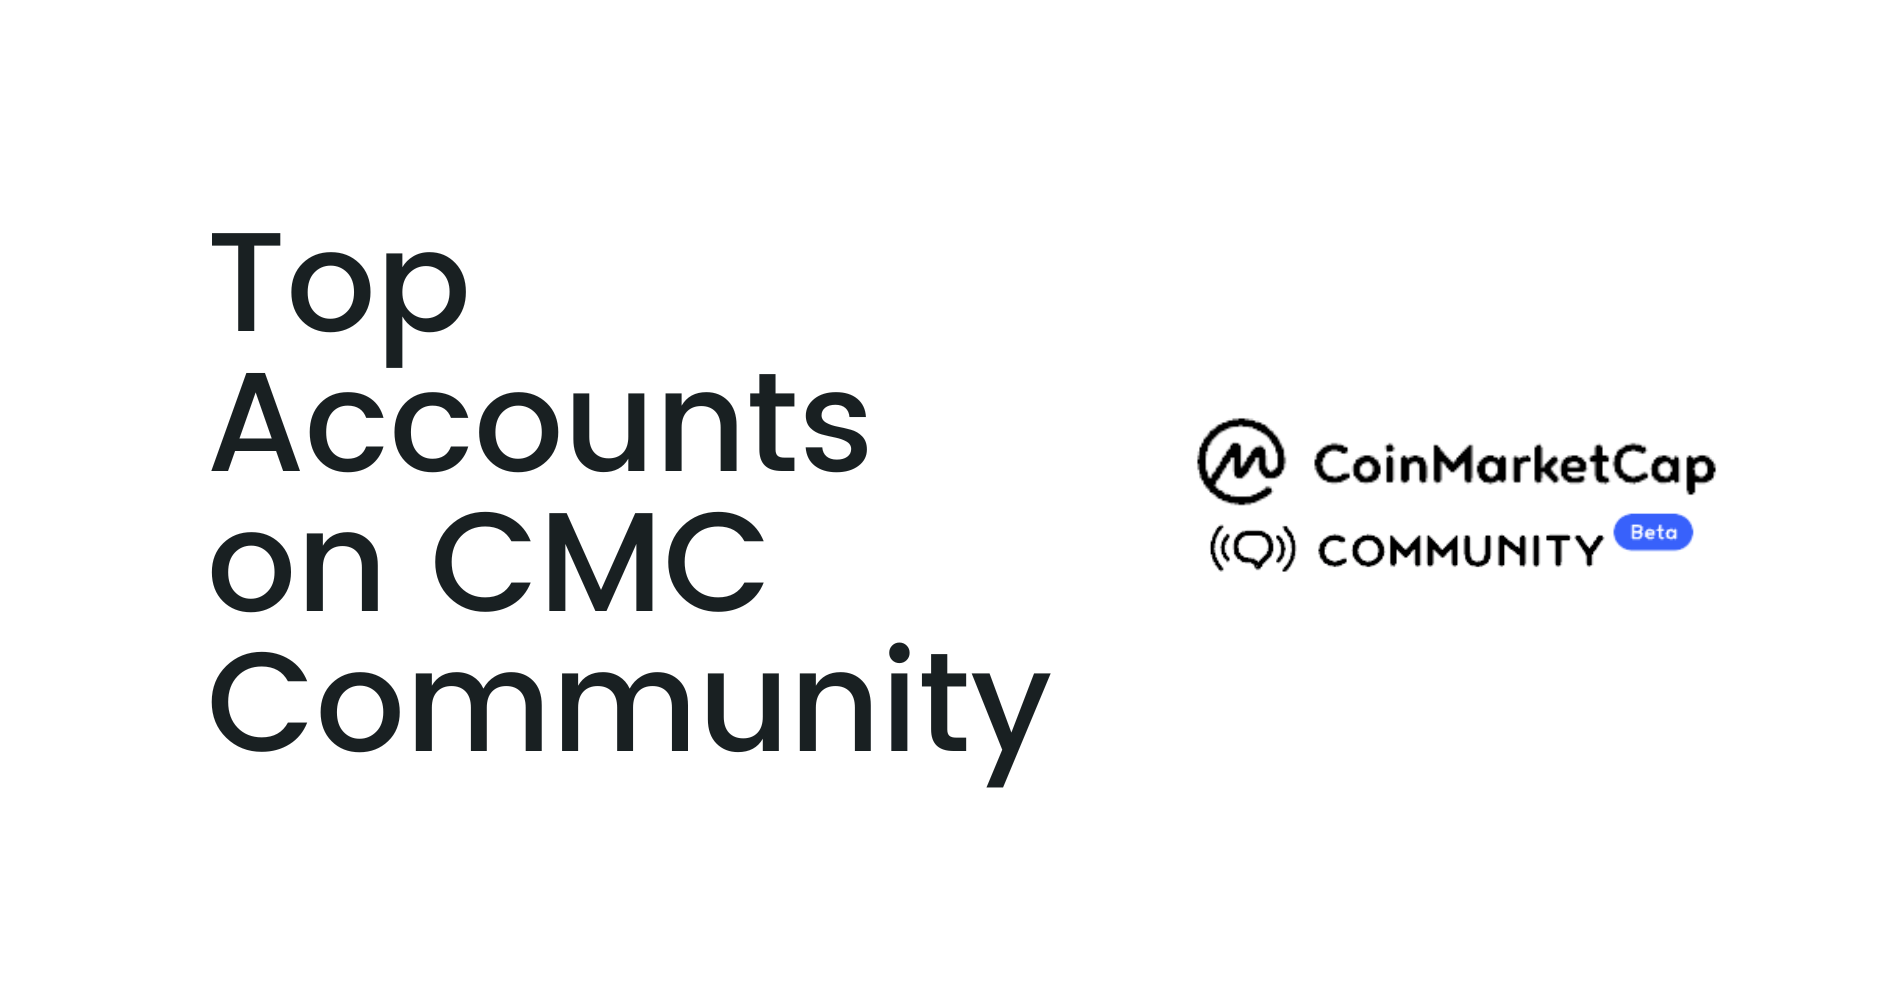 Top Accounts on CMC Community